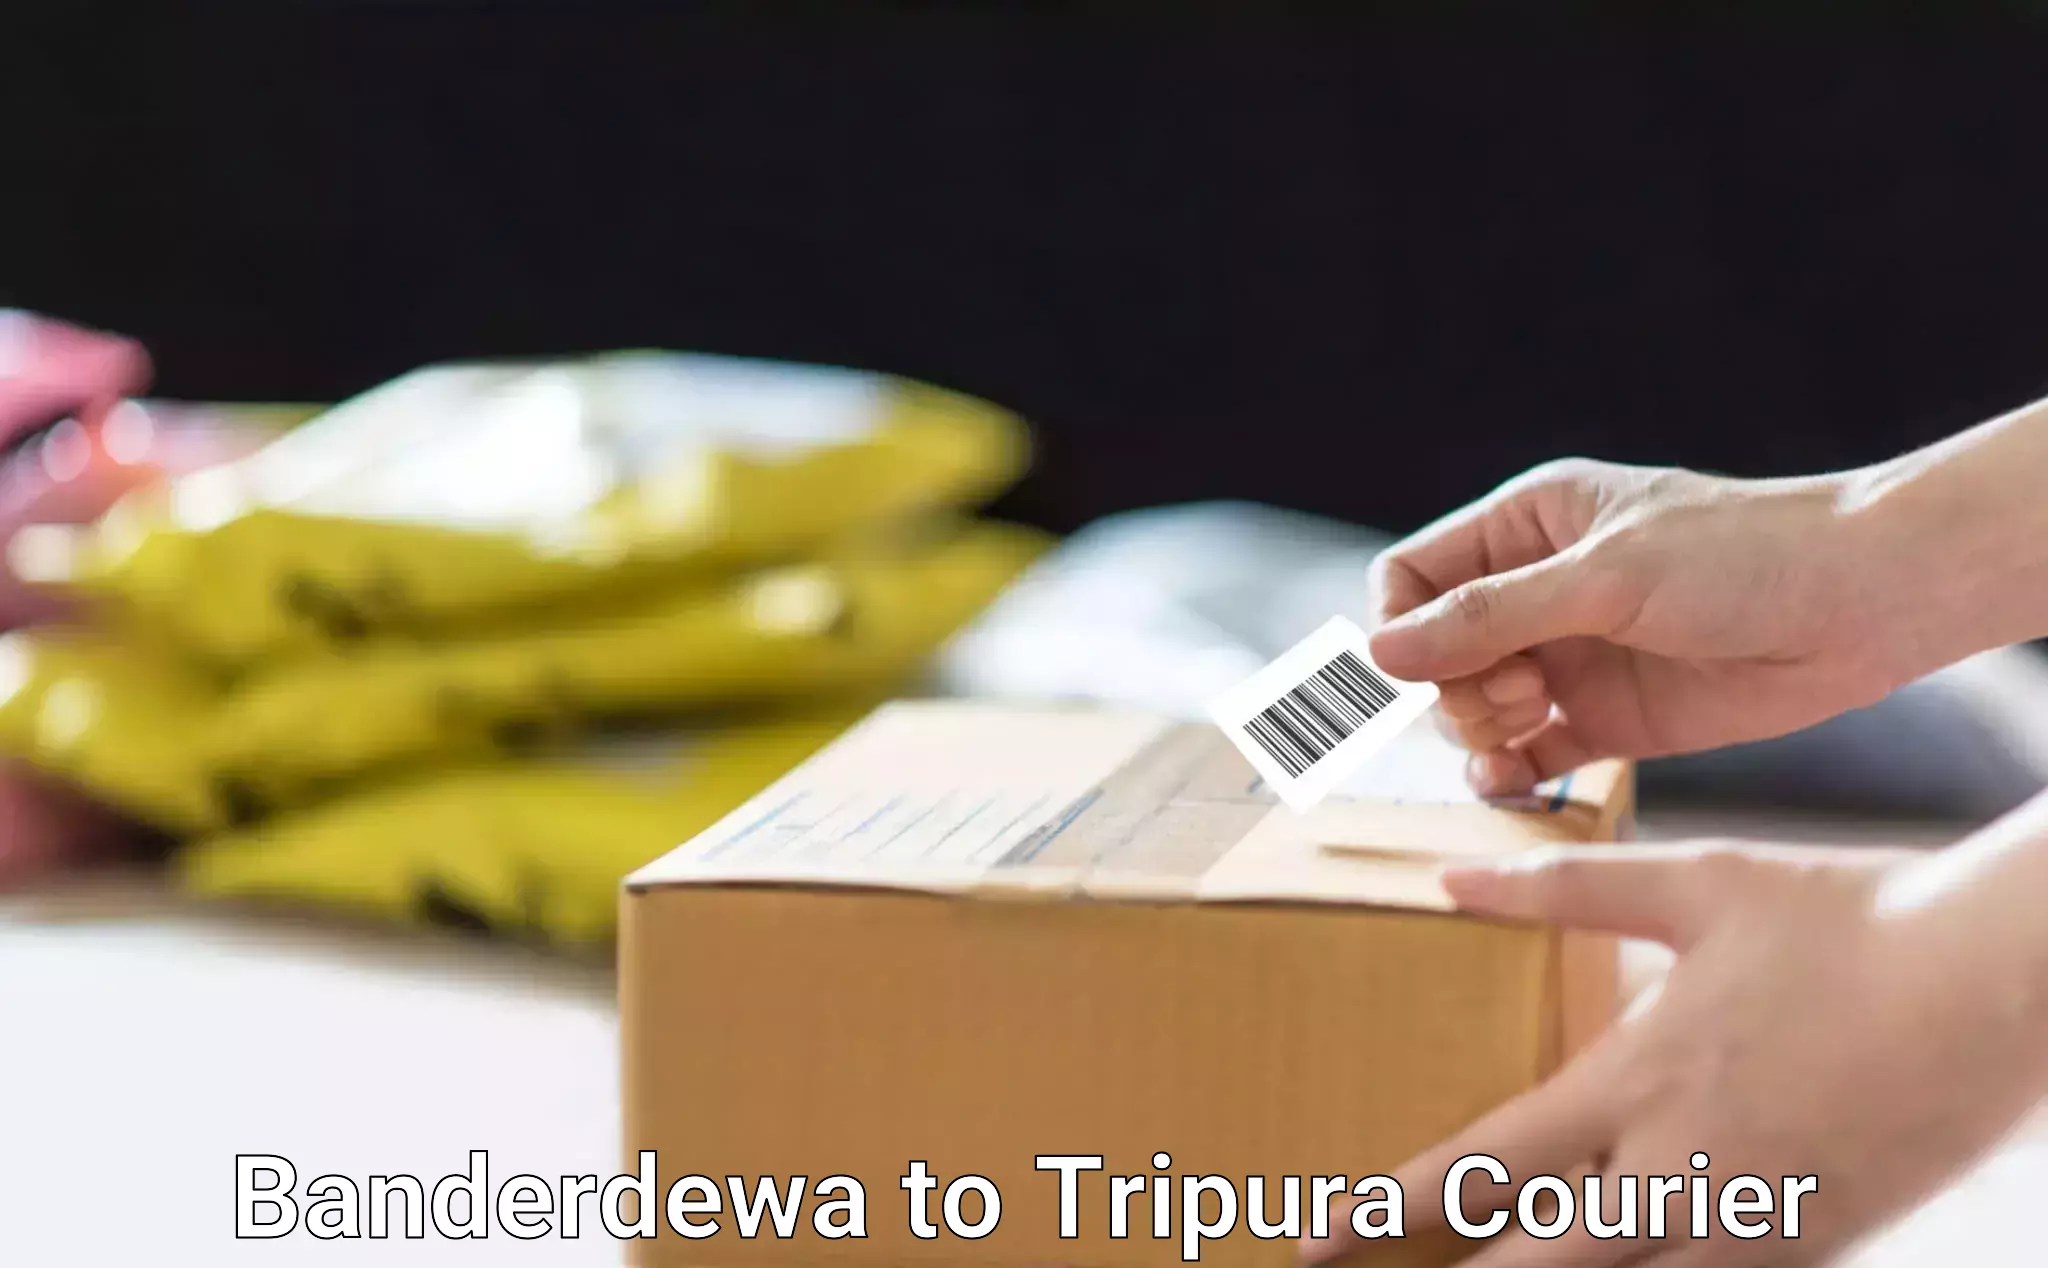 International courier networks Banderdewa to Udaipur Tripura